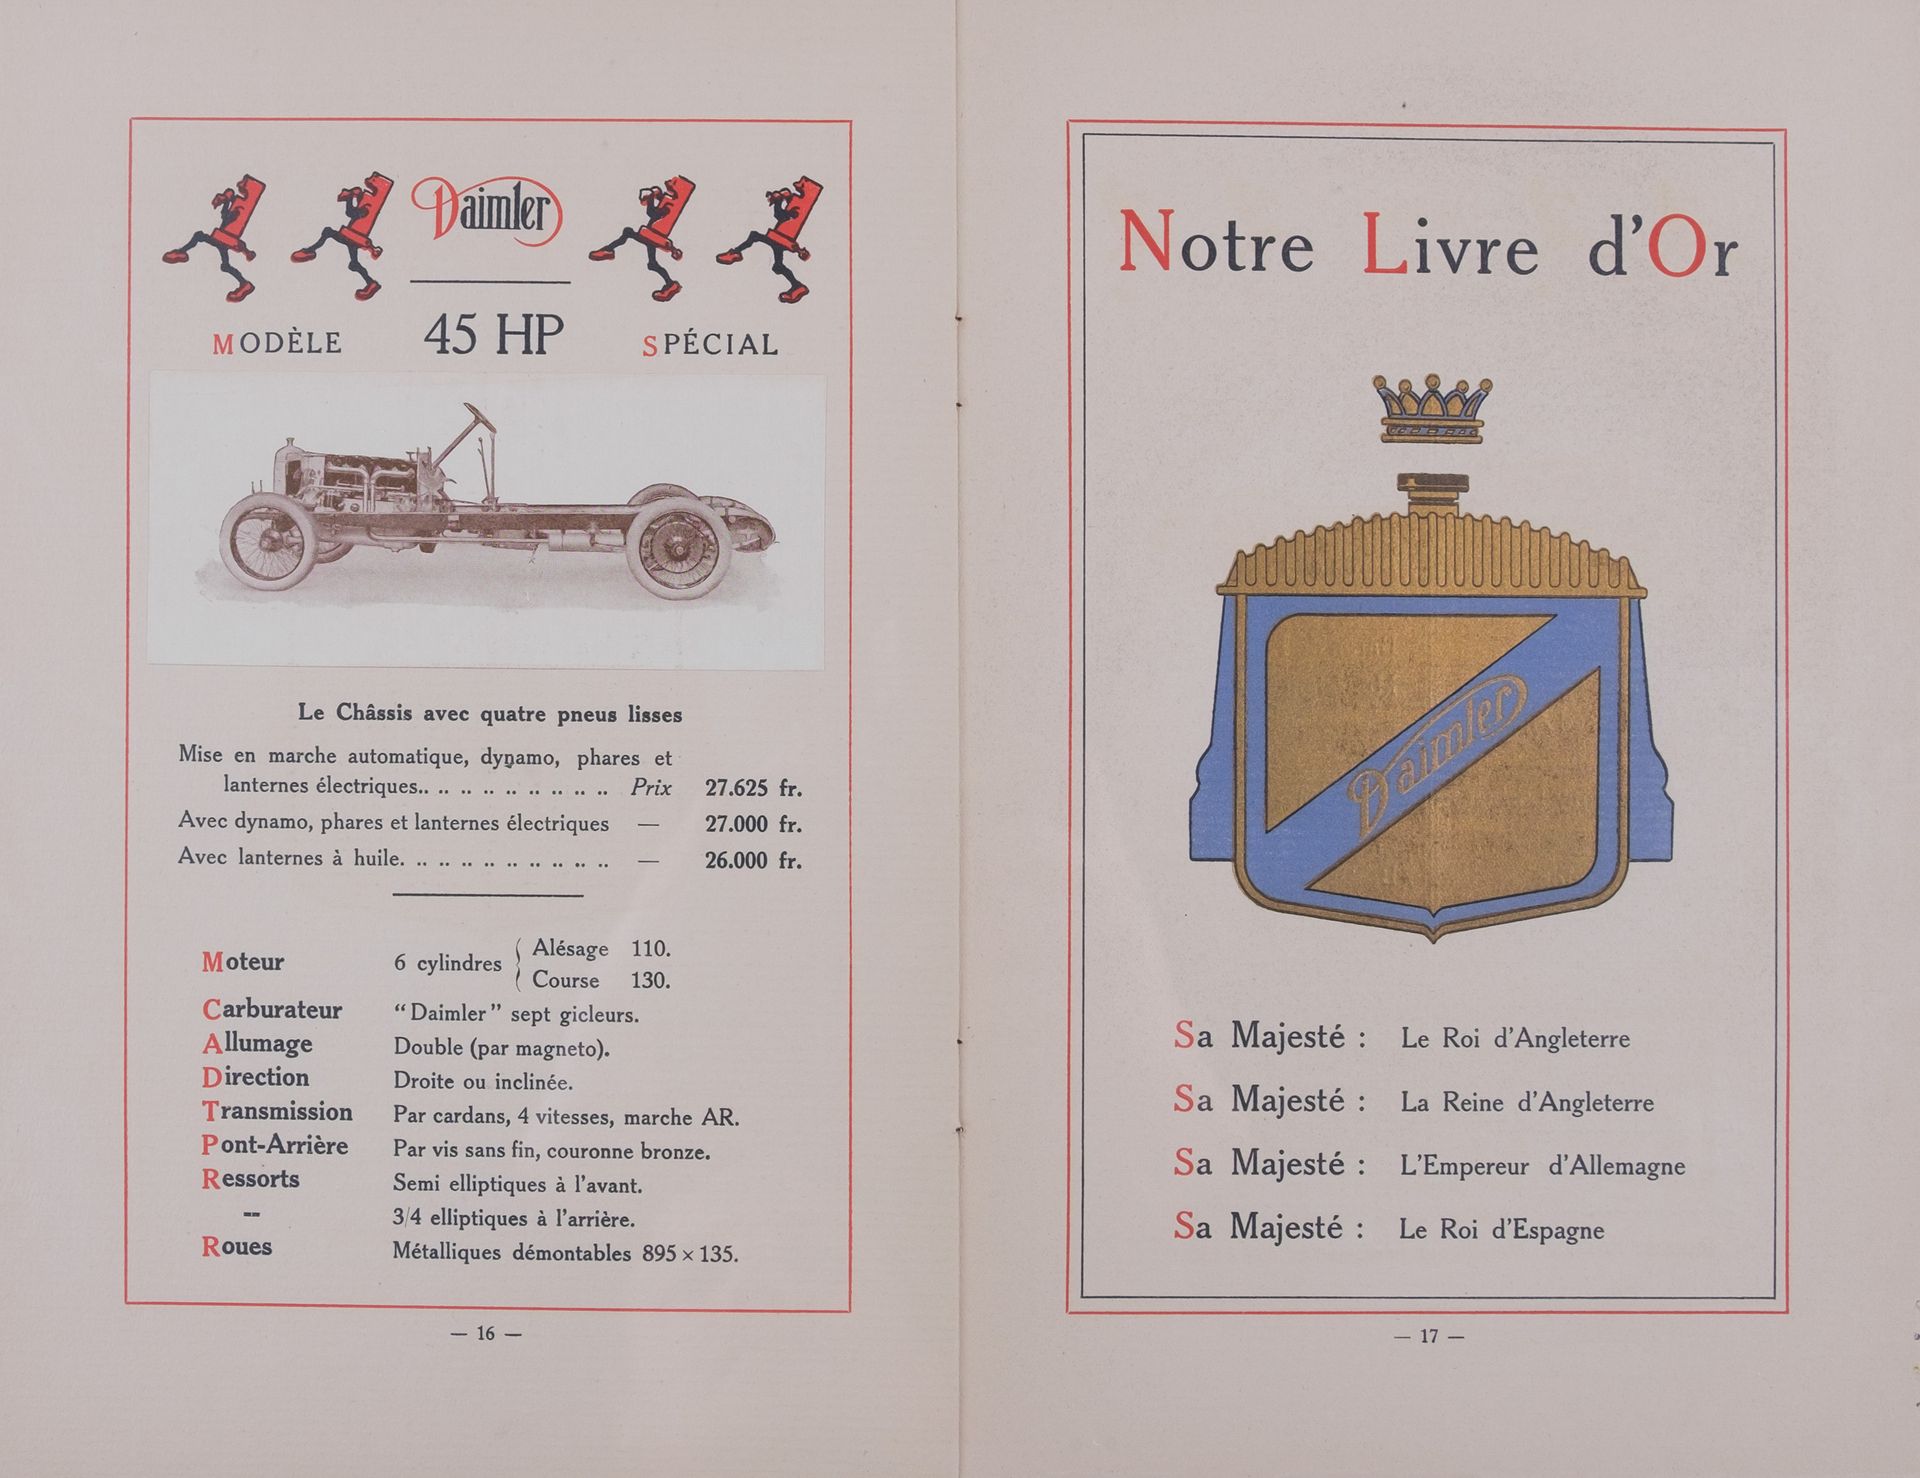 Null DAIMLER, folleto sobre el automóvil, 1914

Cuaderno de tapa dura con motivo&hellip;